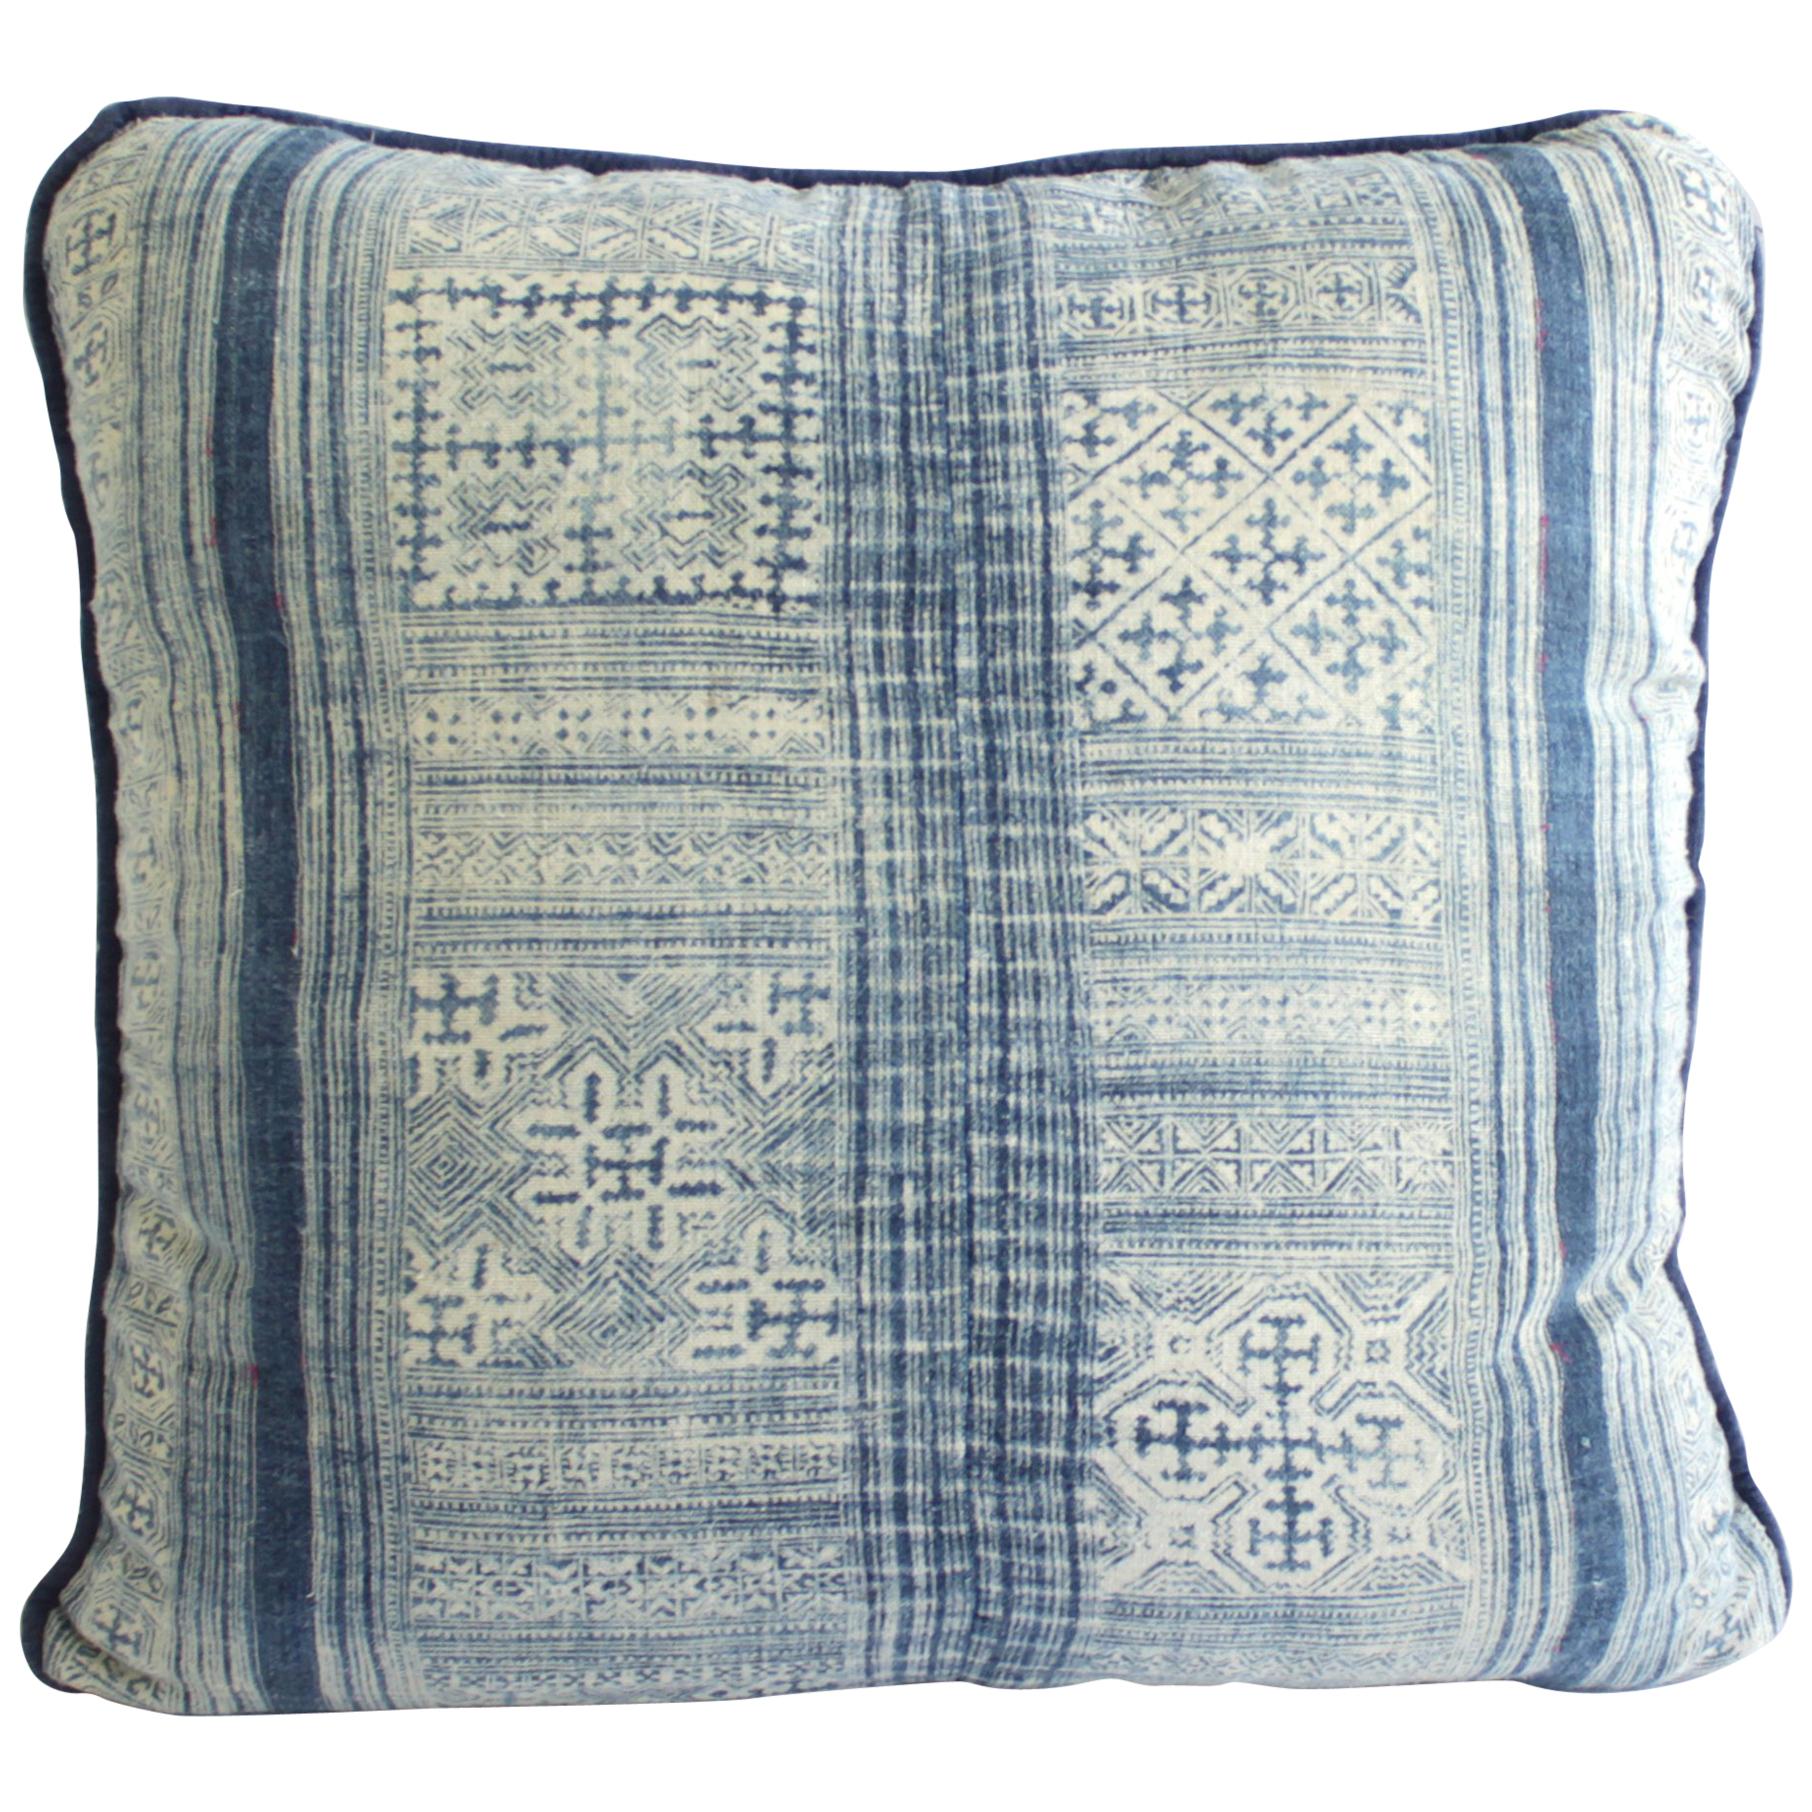 Vintage Indigo Blue and White Batik Pattern Pillow